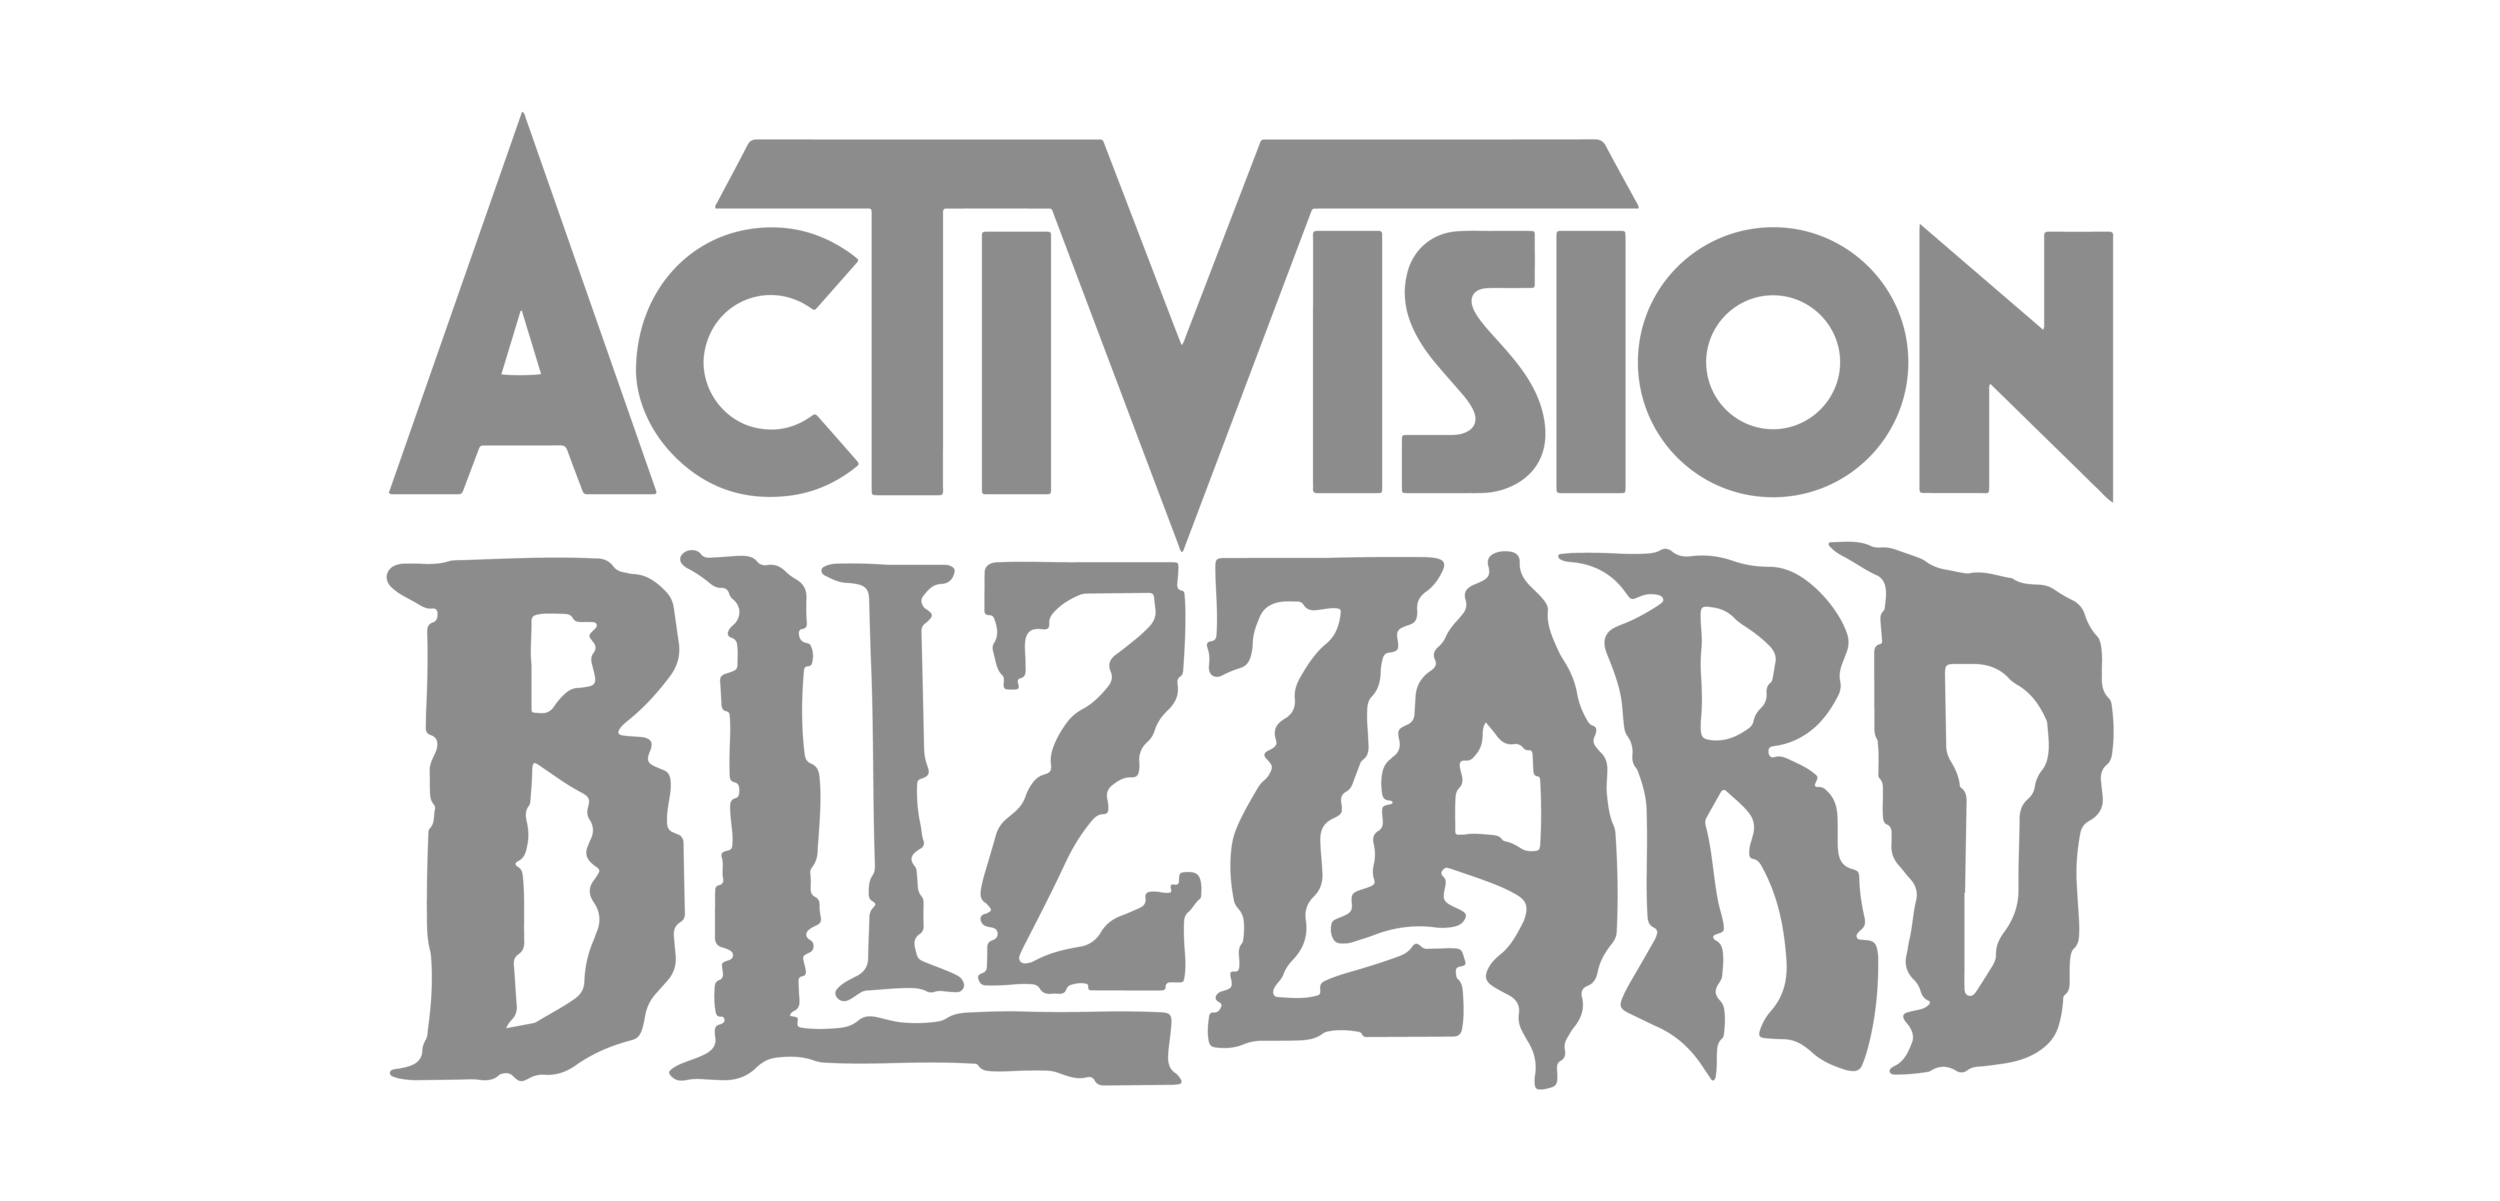 longboy_Activision-blizzard_logo_Black.svg-01.png